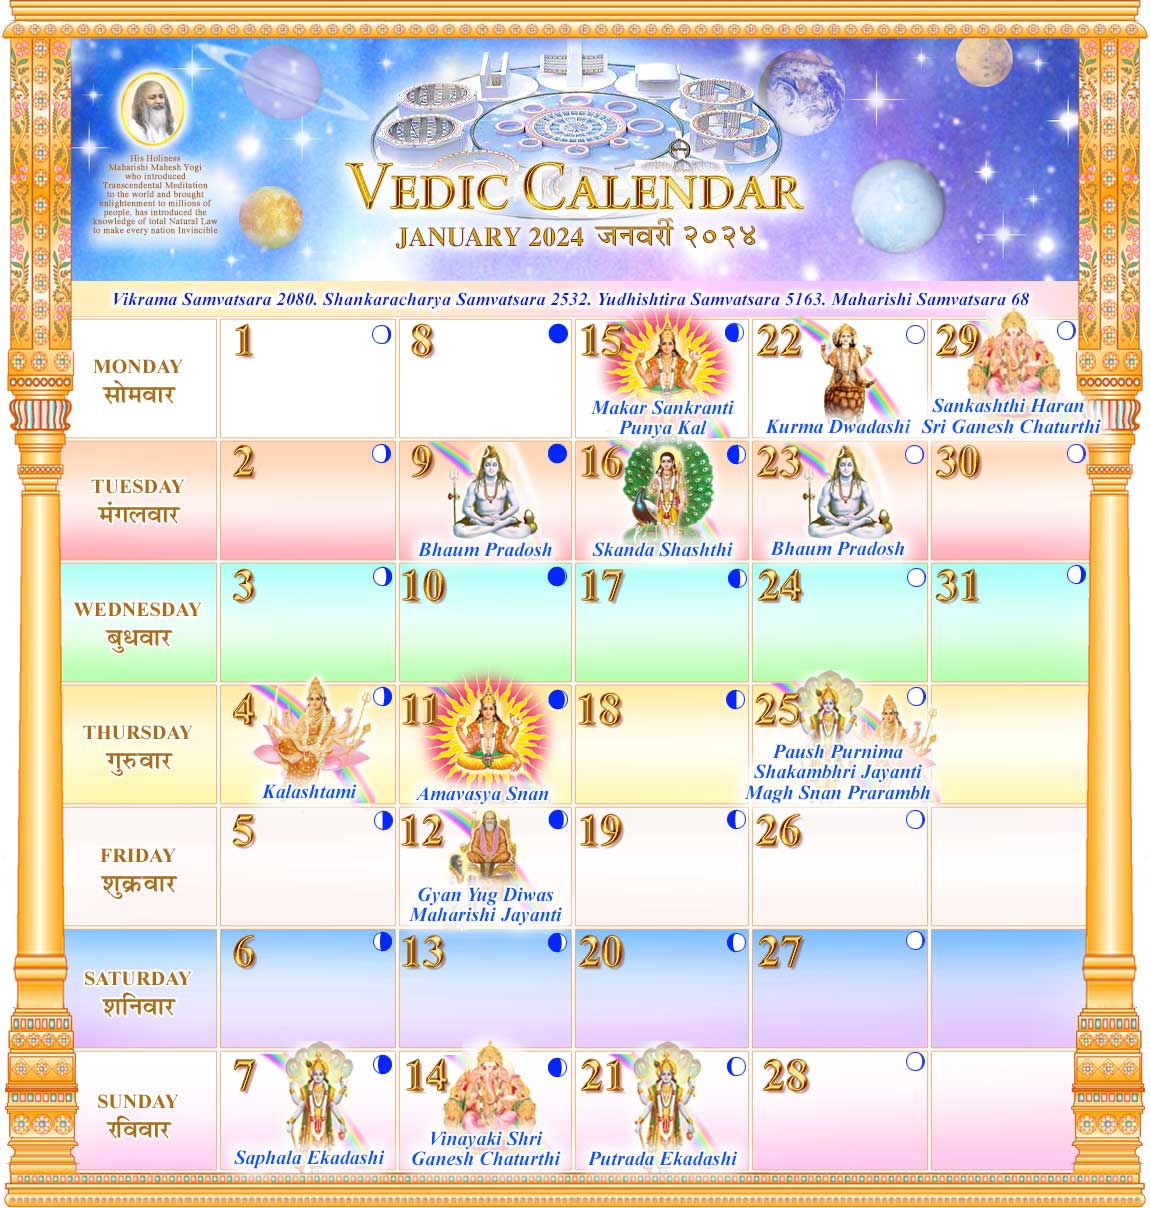 Vedic Calendar January 2020